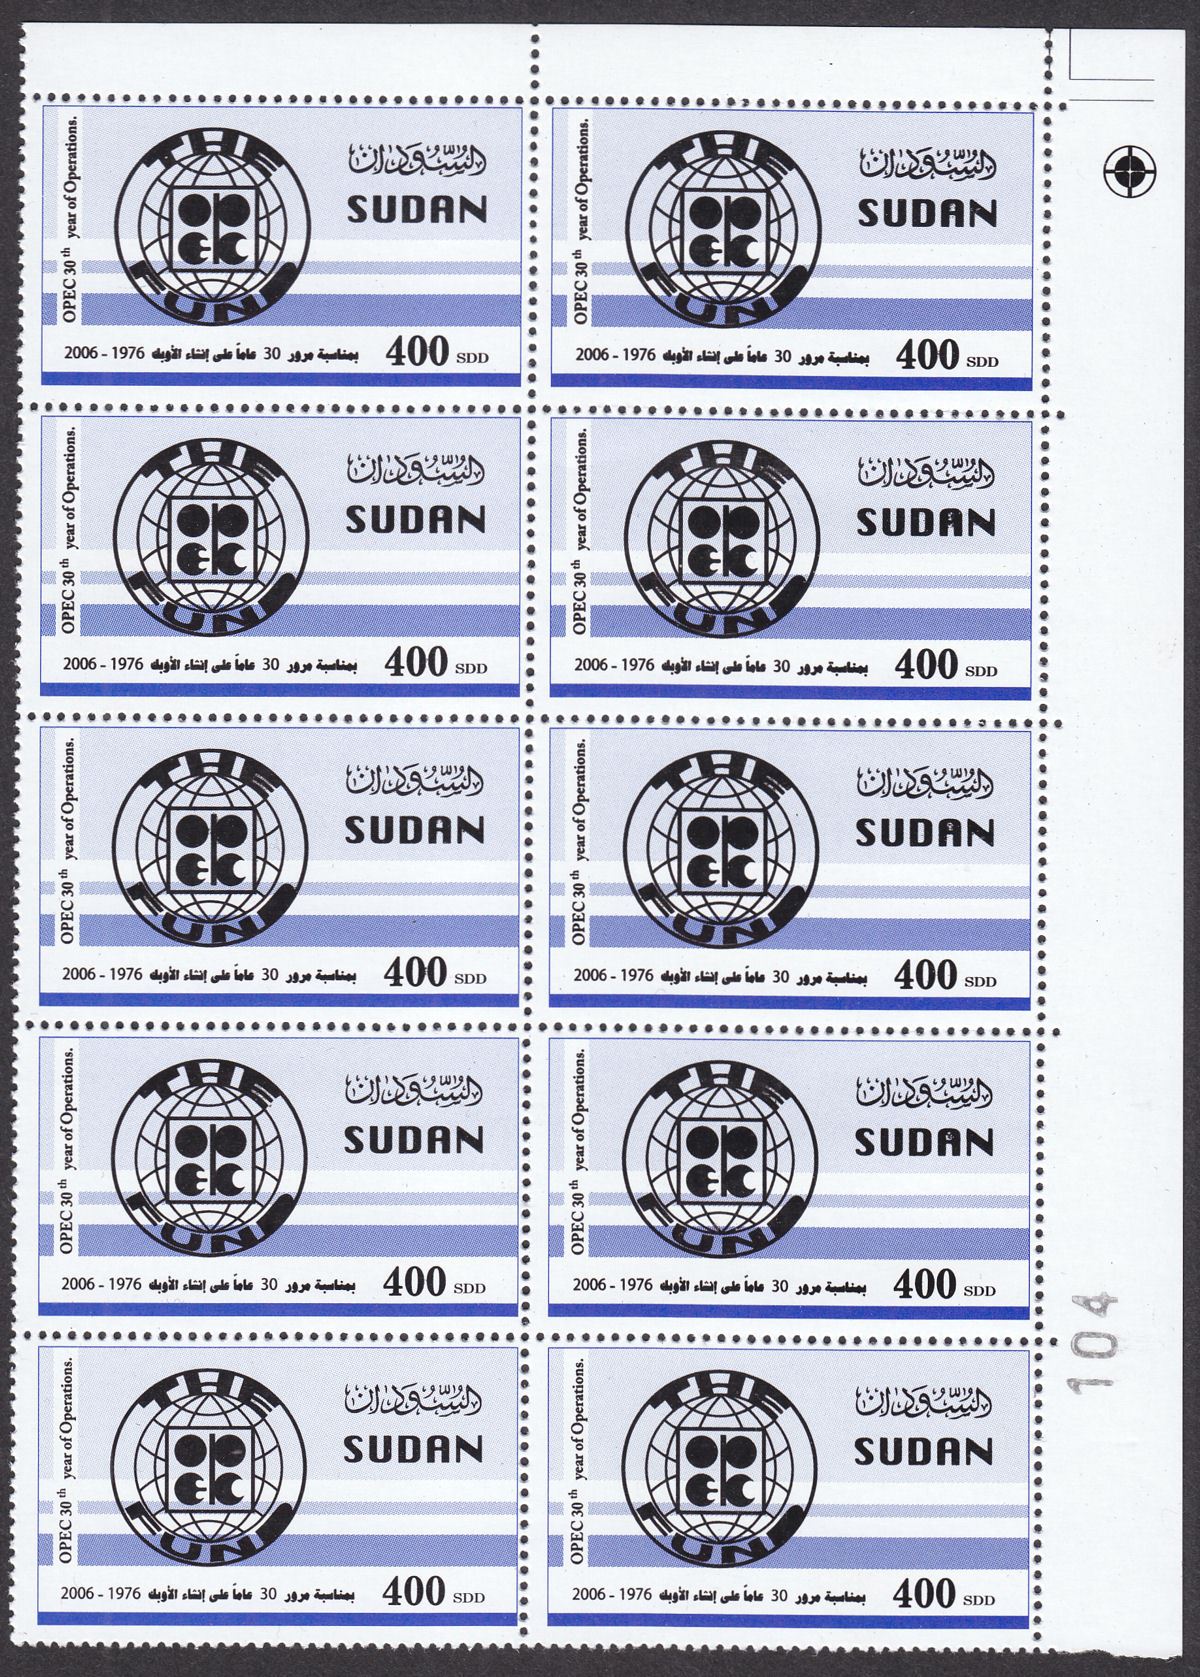 Sudan 2006 50th Anniversary of OPEC Block Set UM Mint SG669-671 cat £200